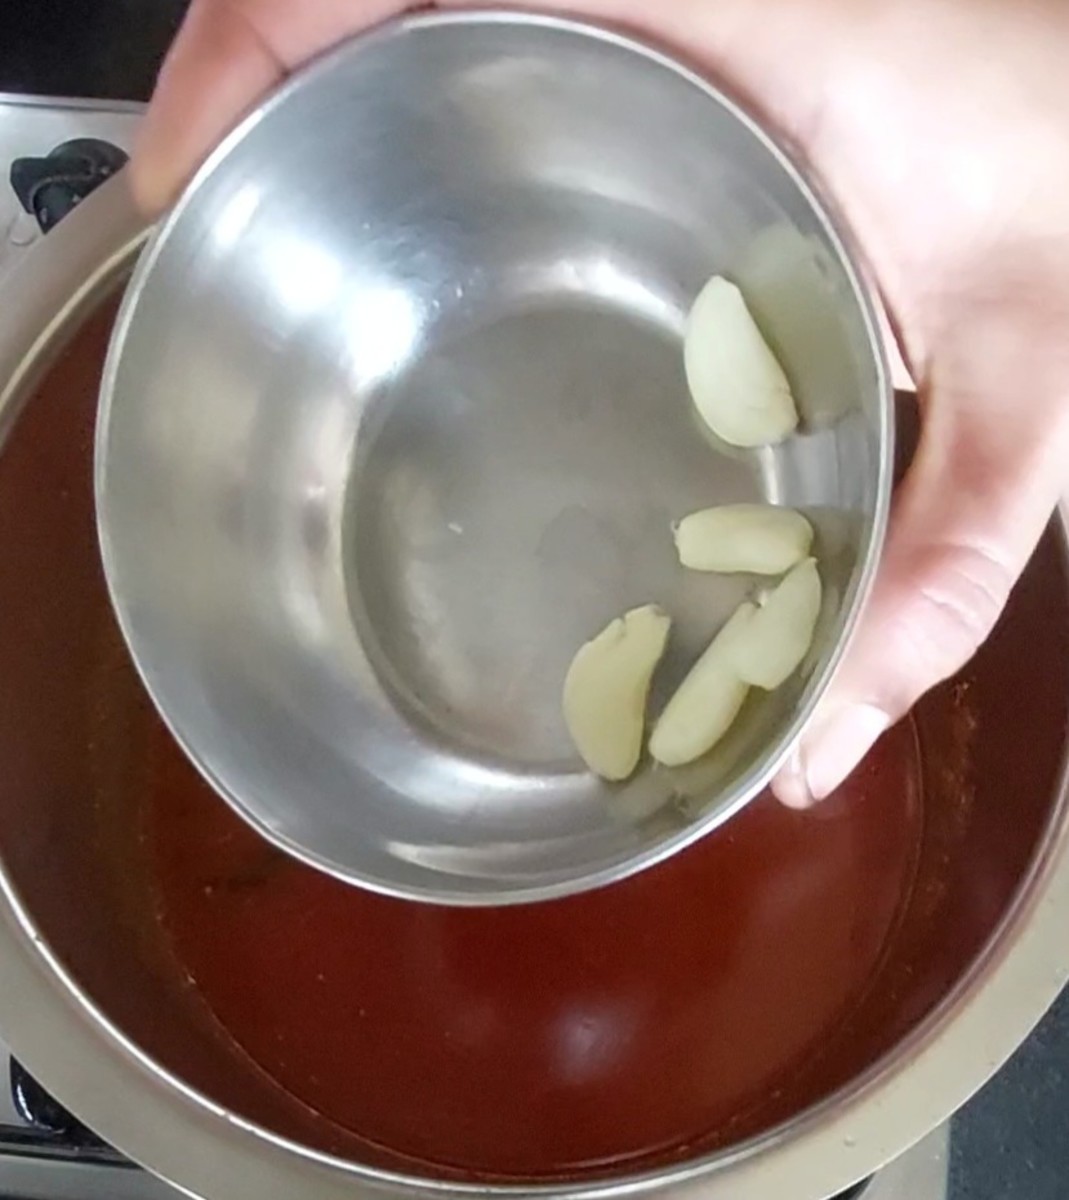 Add 4-5 crushed garlic cloves.